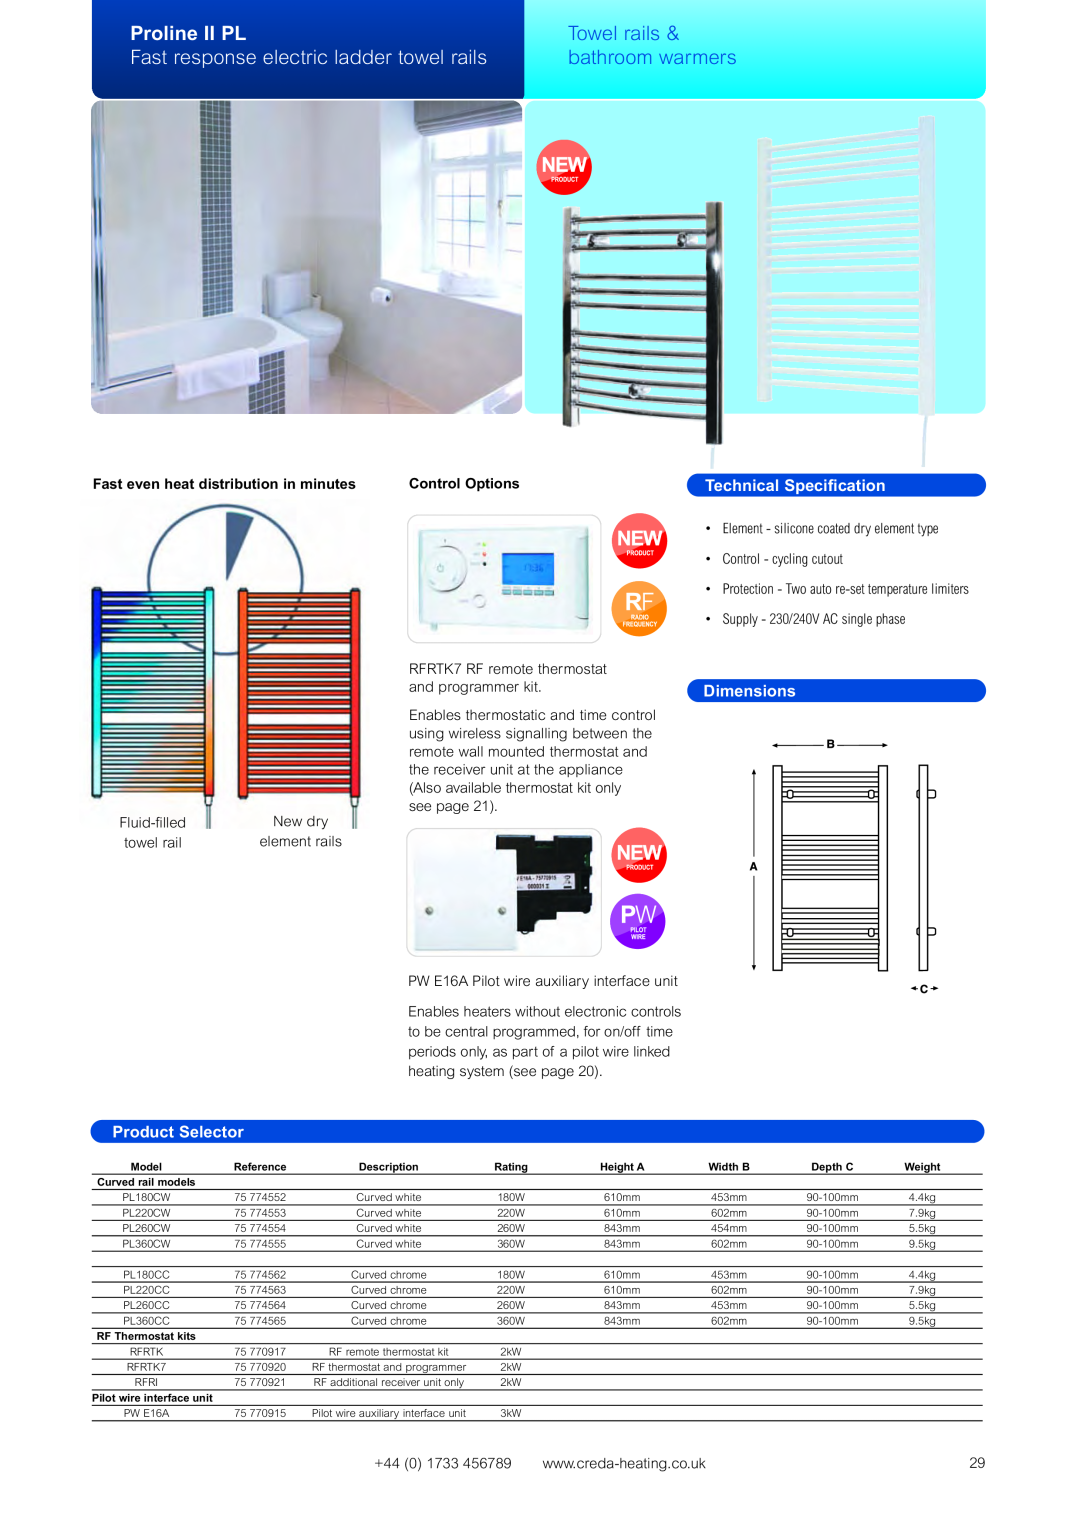 Creda Heating Solution Proline II PL, Towel rails, Fast response electric ladder towel rails, bathroom warmers, Dimensions 